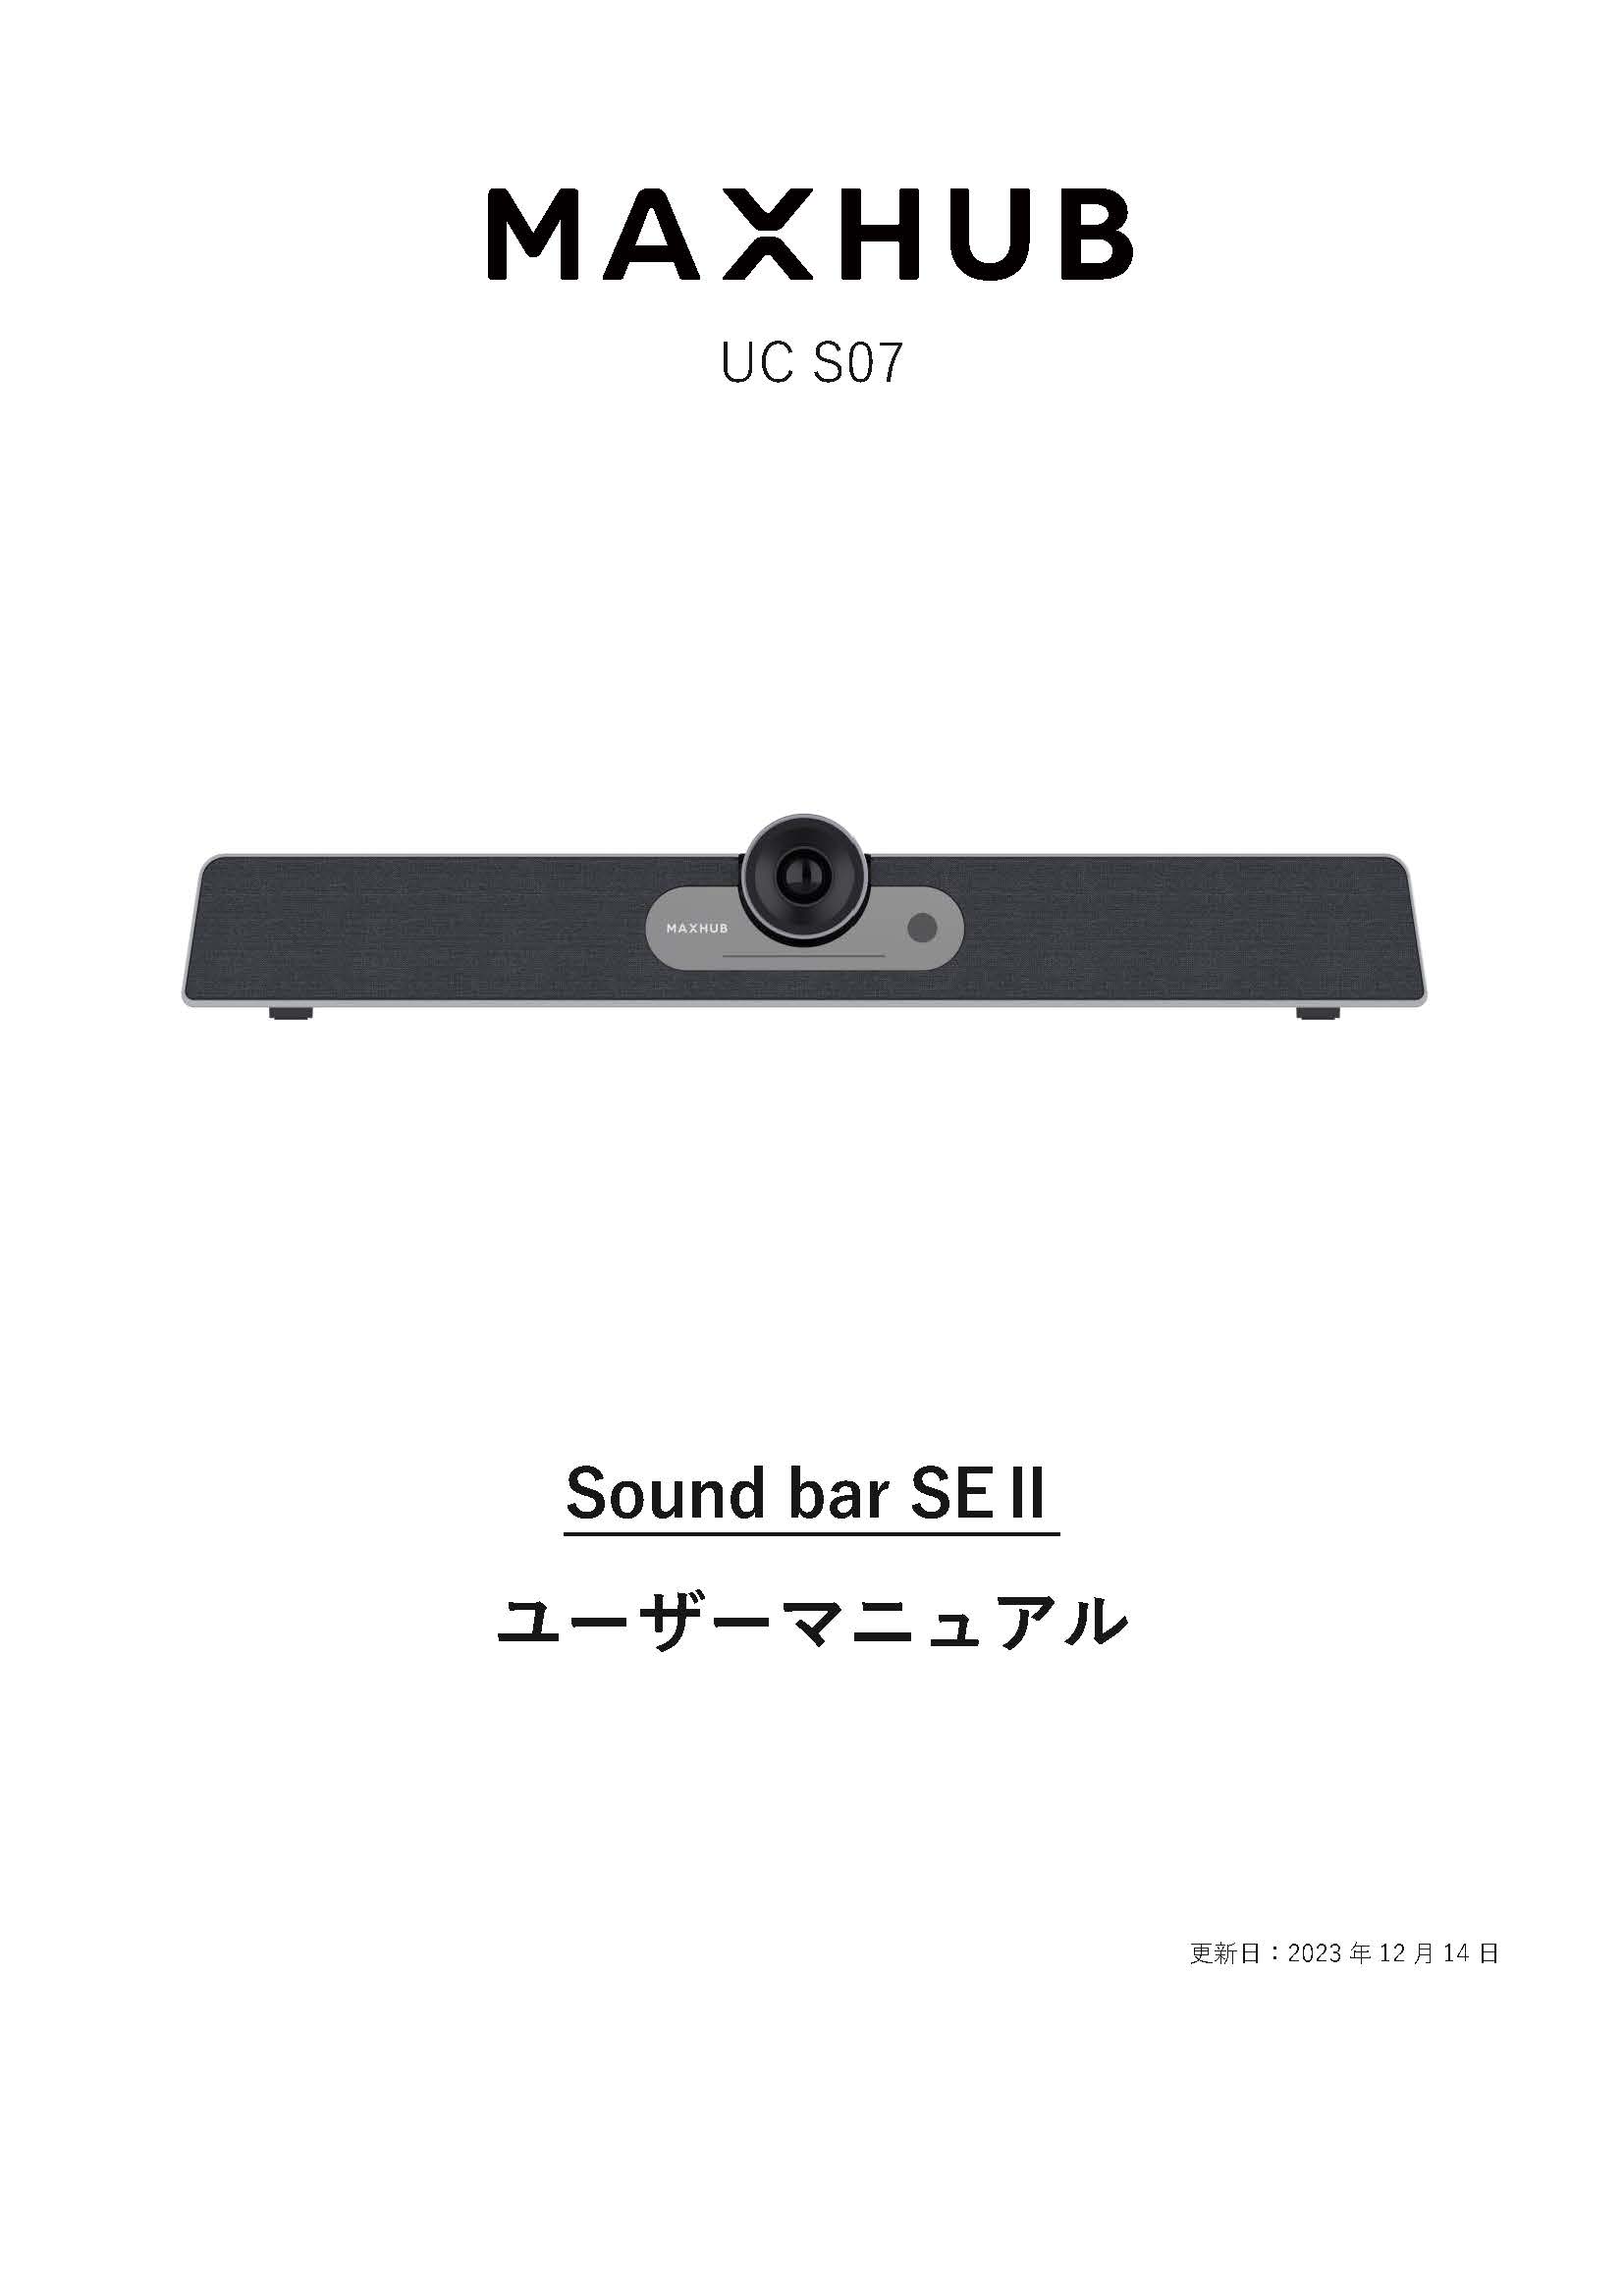 Sound bar SEⅡ